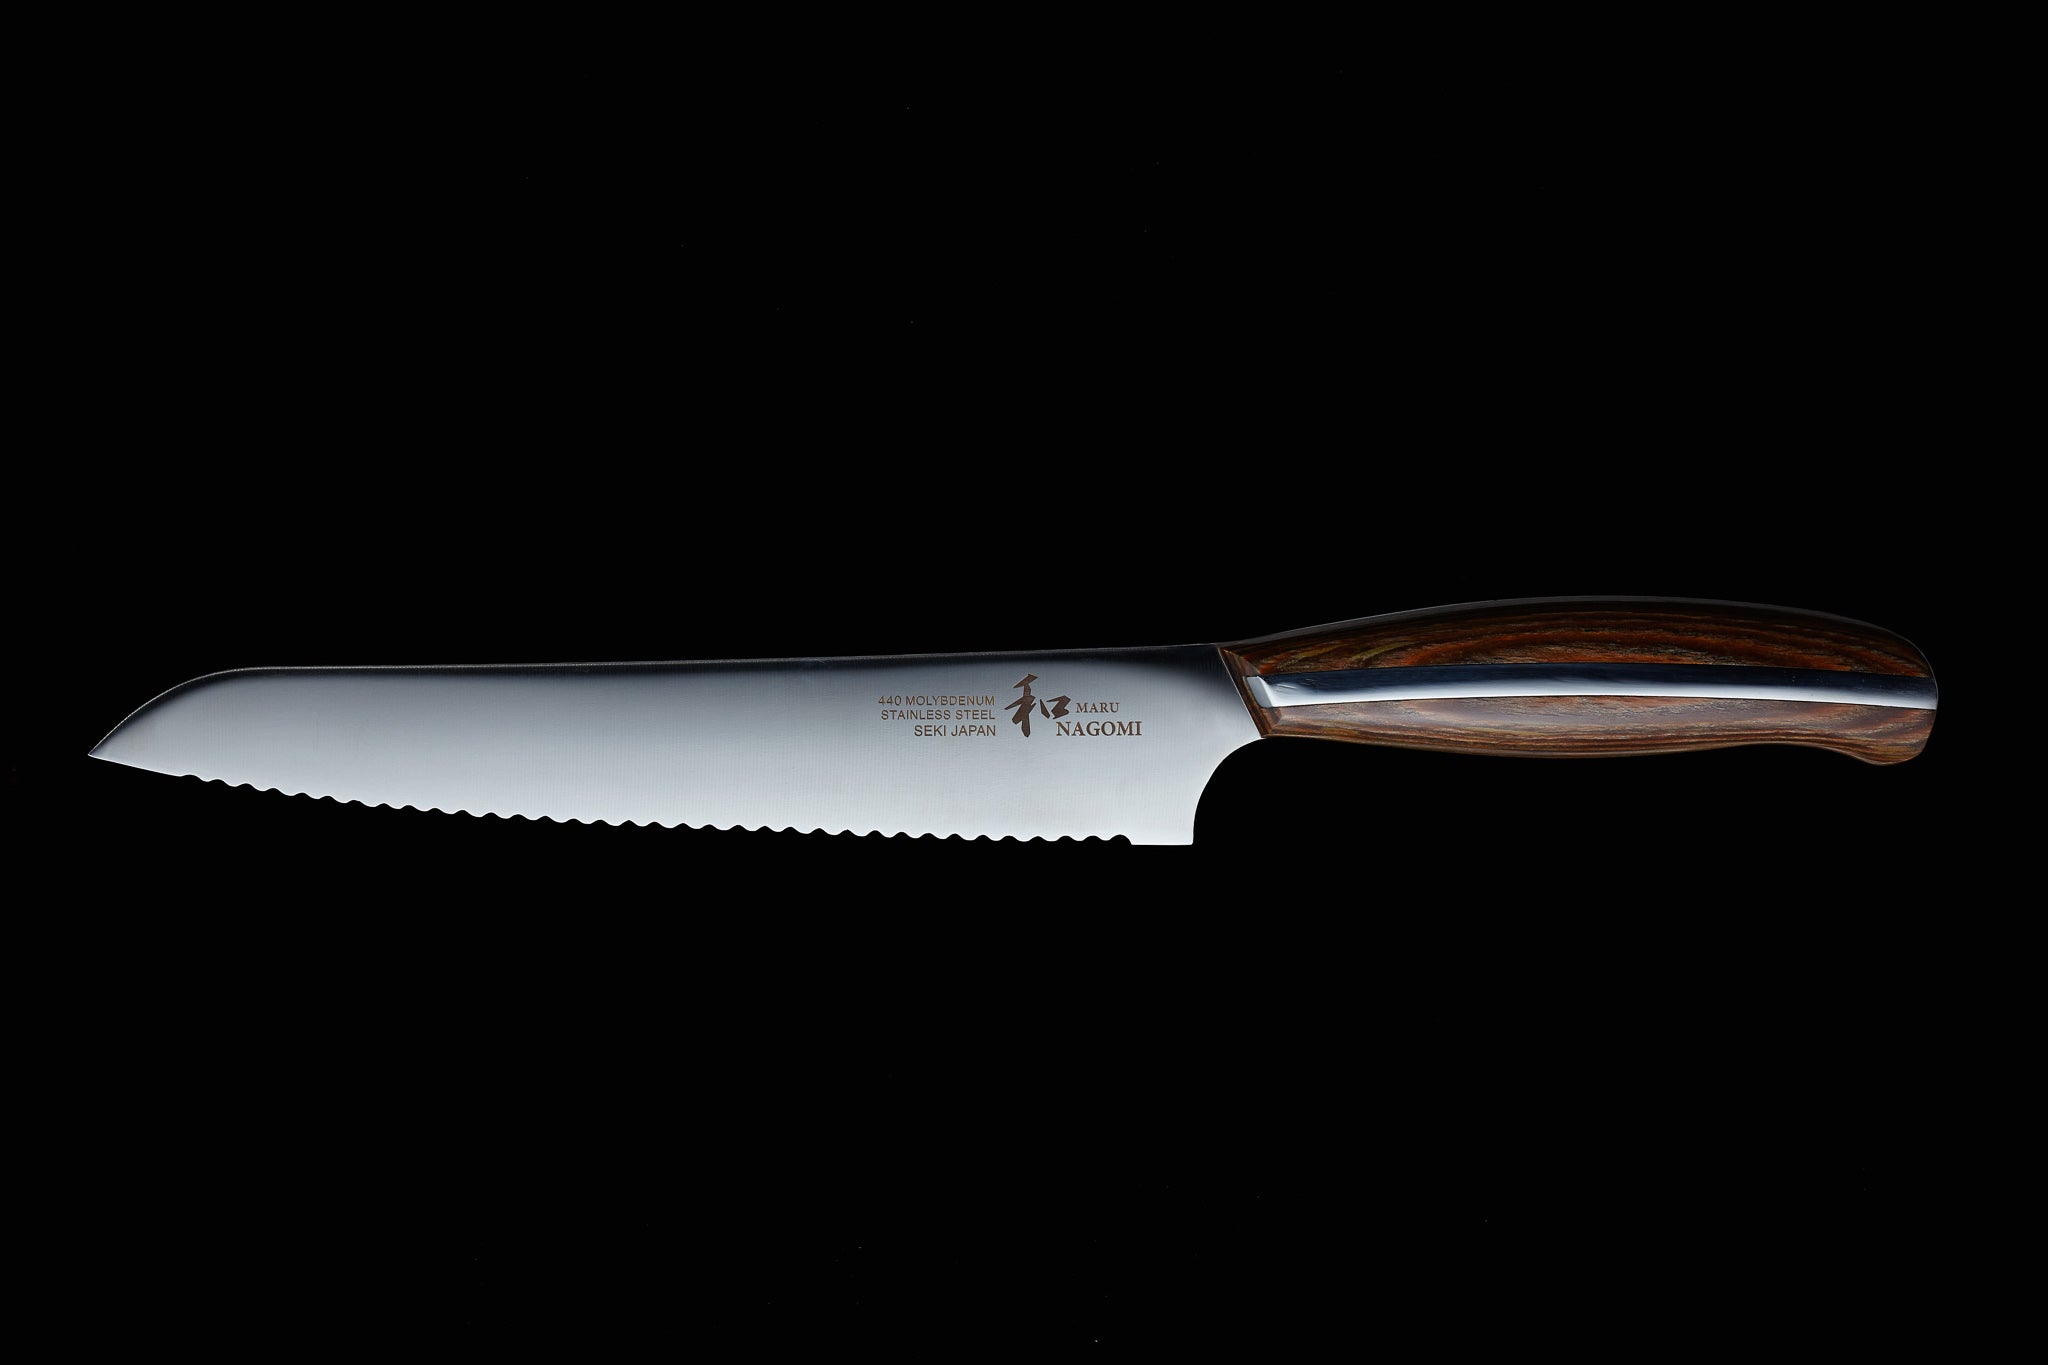 Nagomi Japan Bread Knife (RAB)